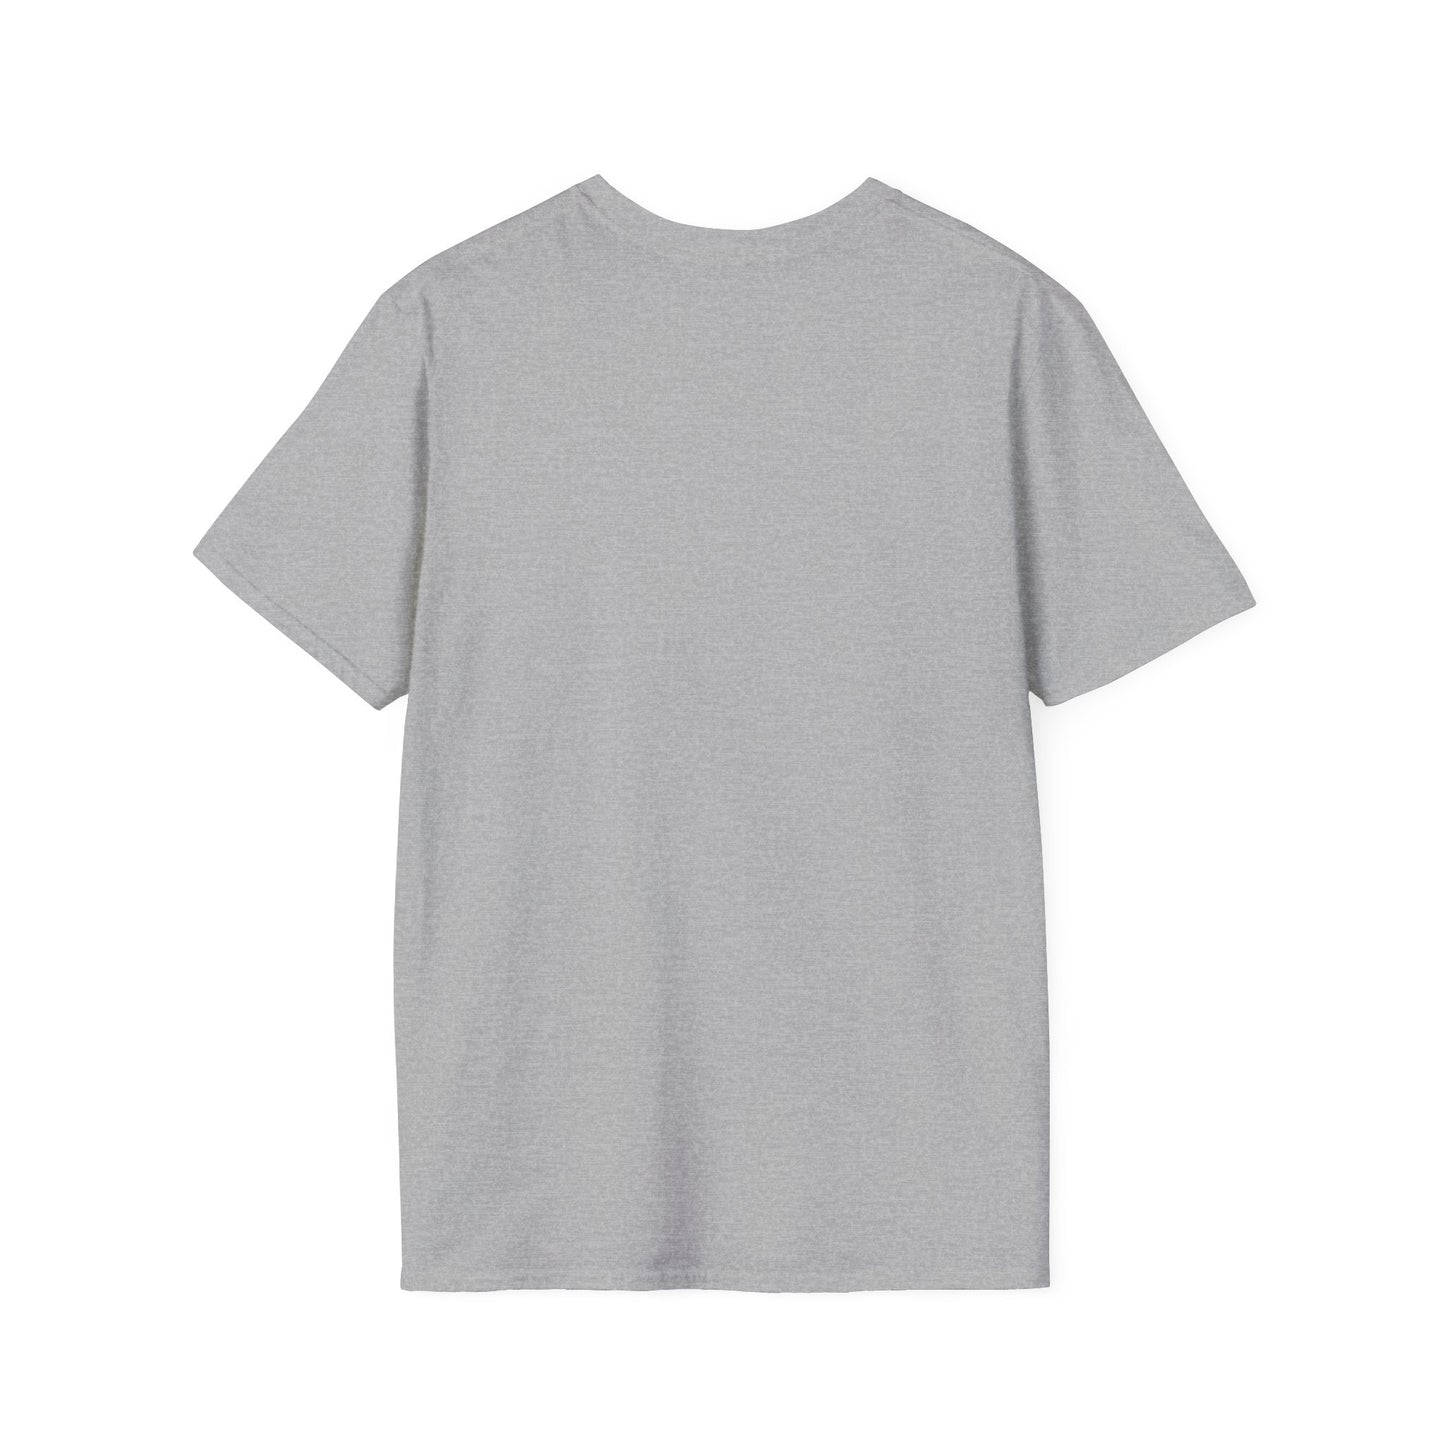 PODENGO PRIDE Splash Unisex Softstyle T-Shirt